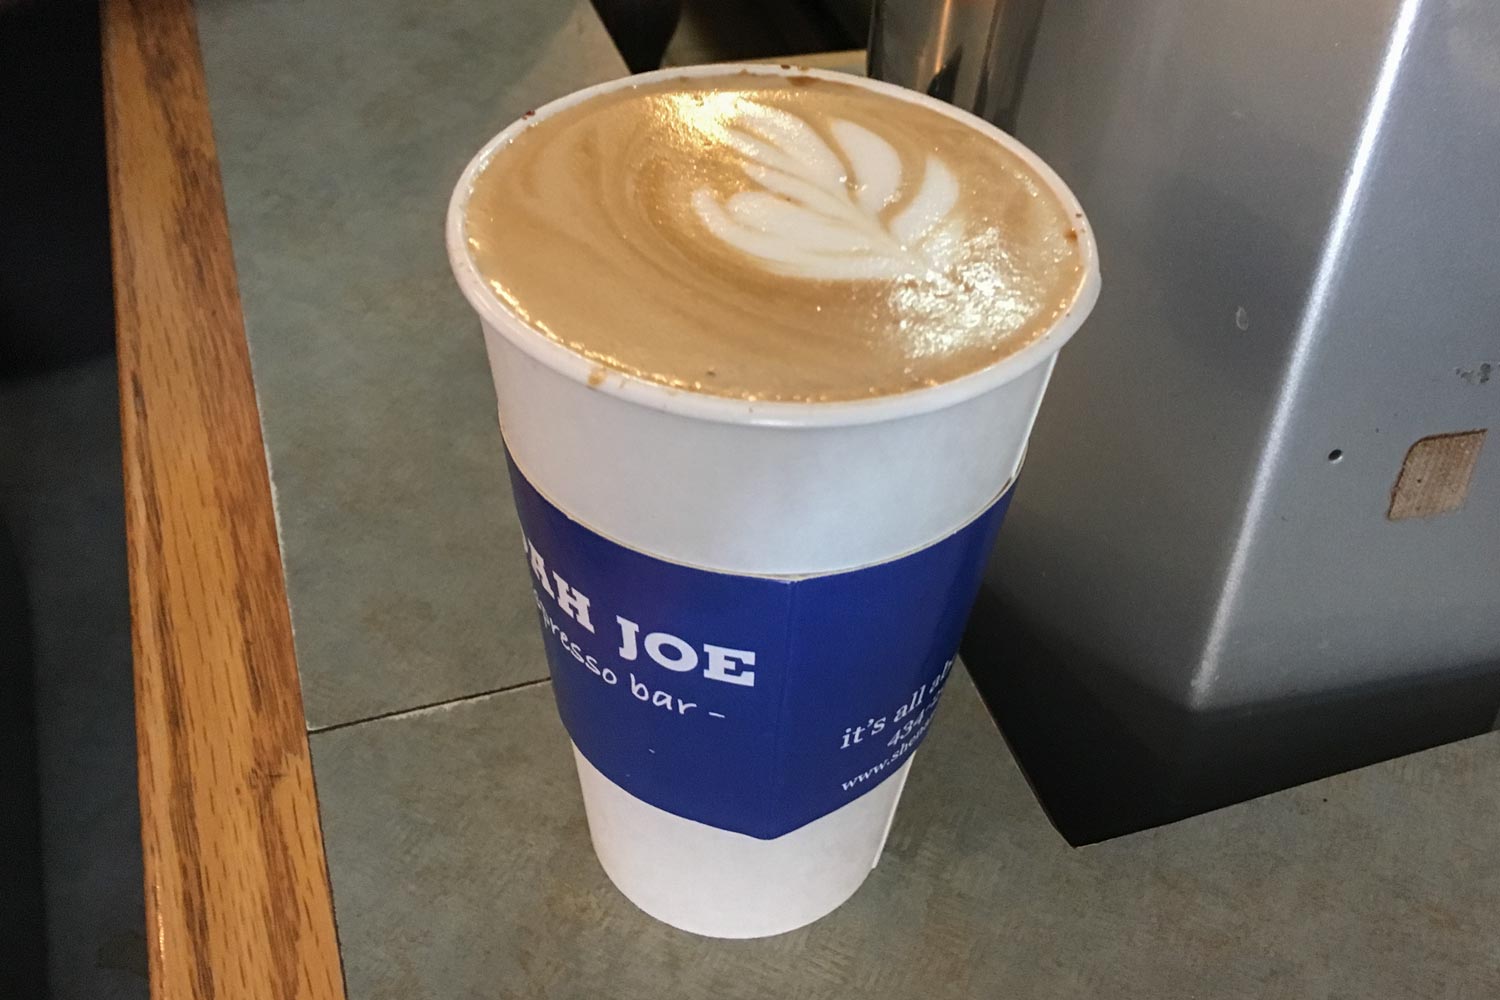 Shenandoah Joe coffee in a paper cup